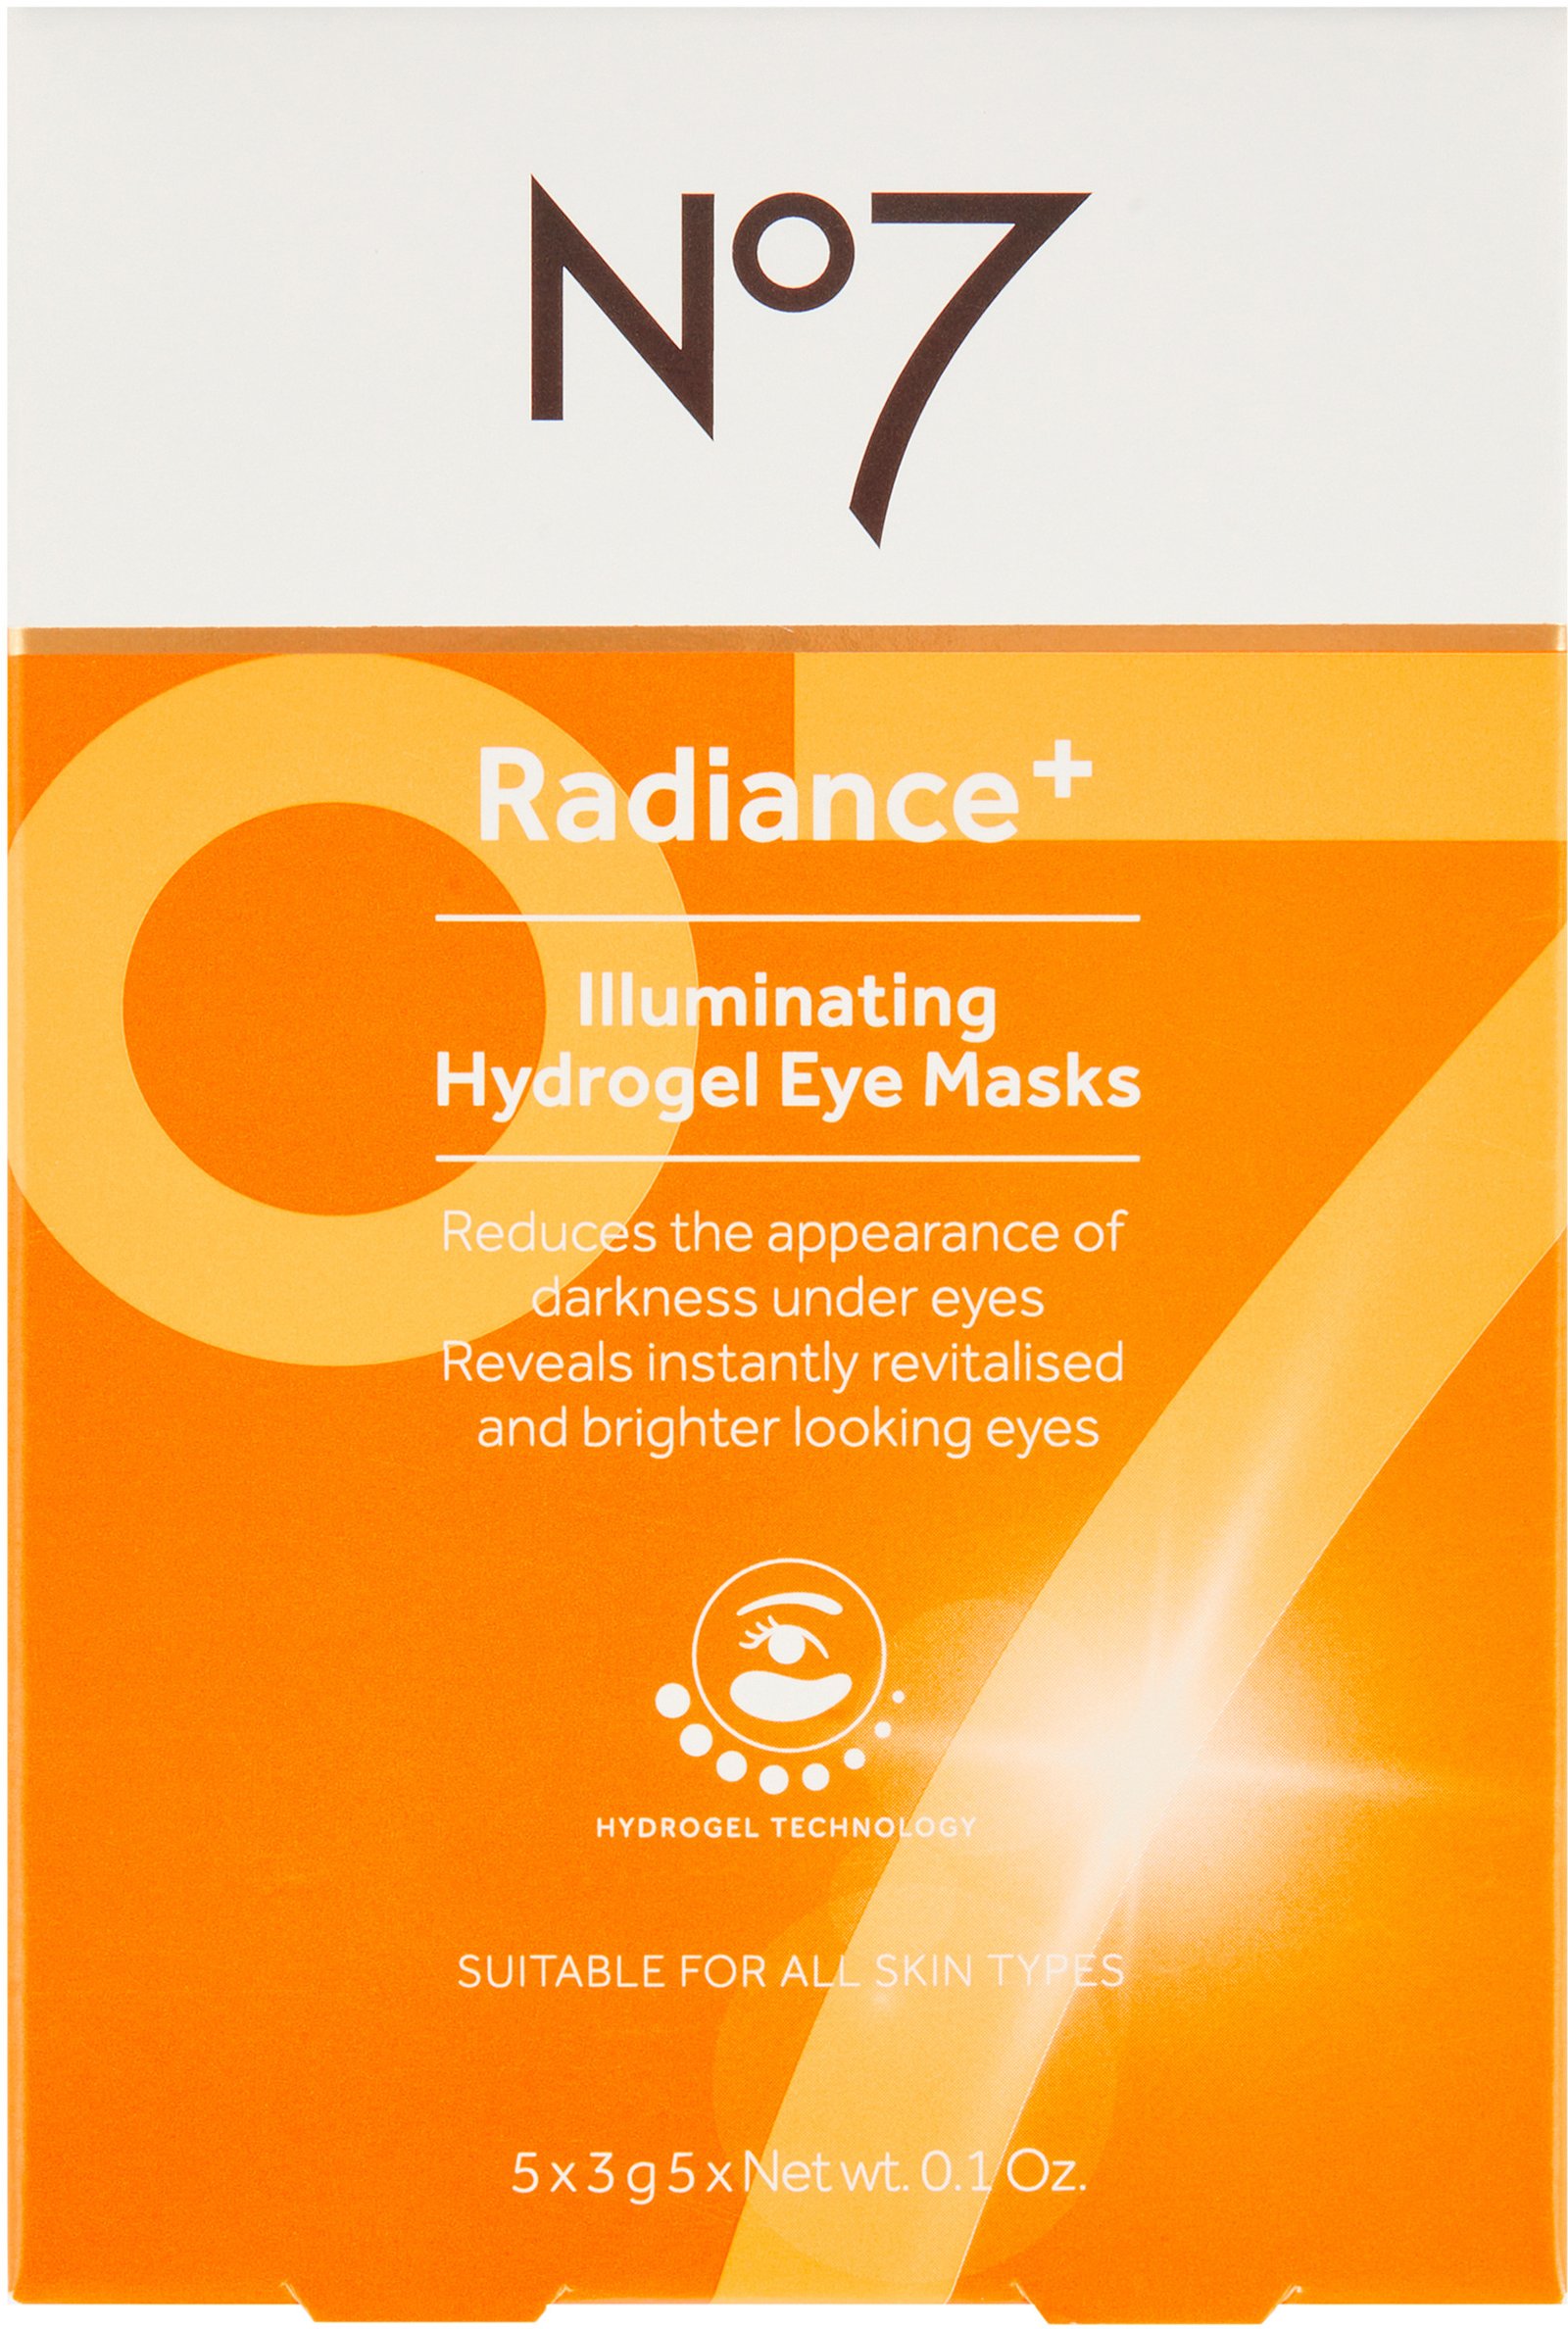 No7 Radiance+ Illuminating Hydrogel Eye Masks 5 st